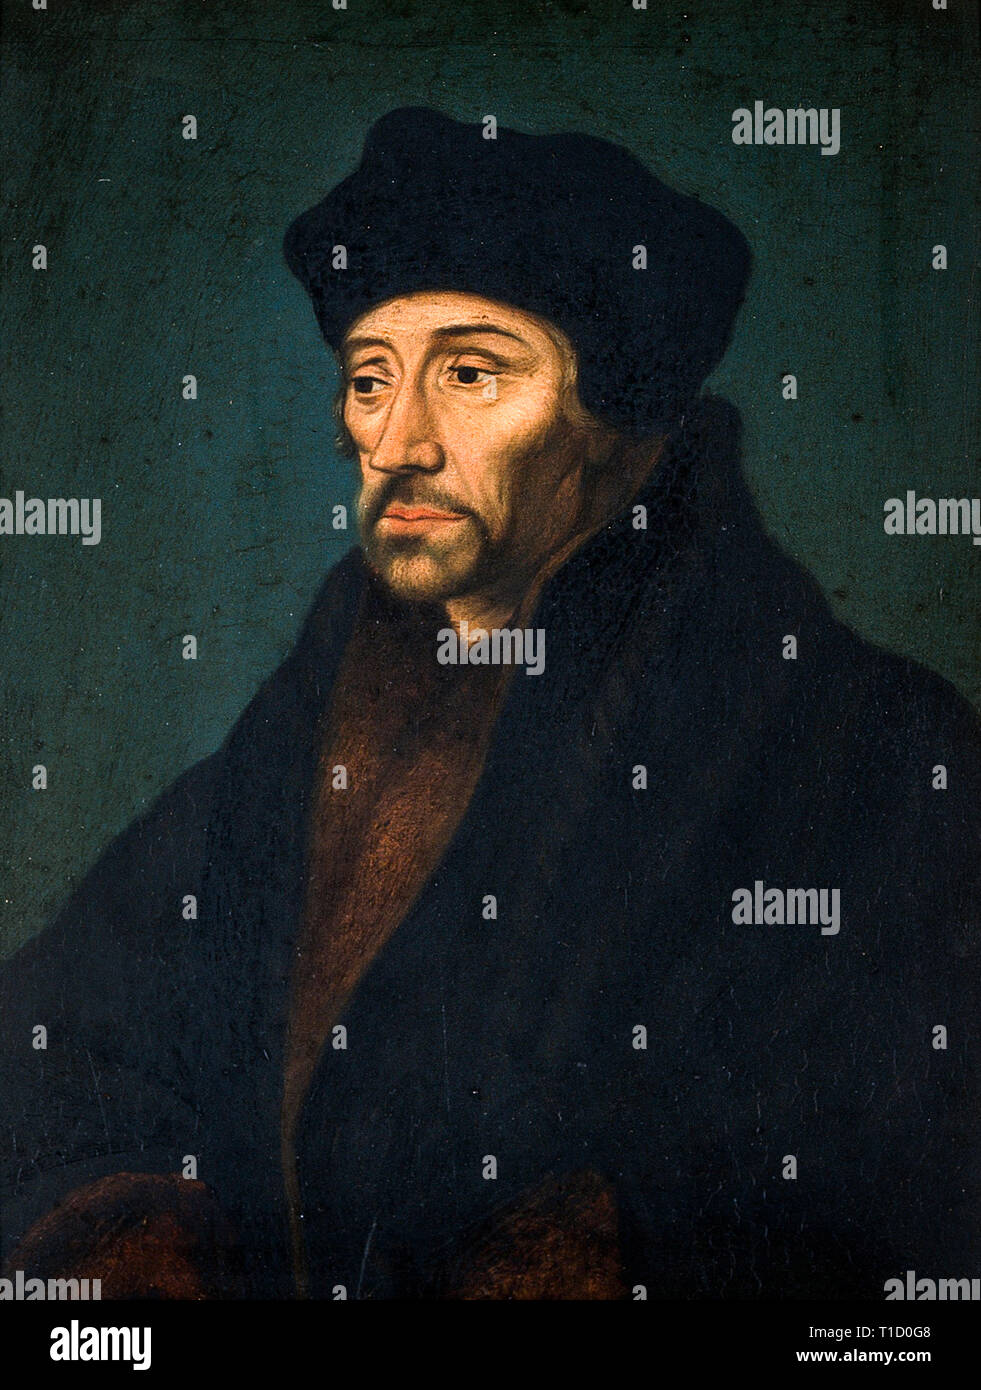 Desiderius Erasmus (1466-1536), portrait painting, circa 16th Century, artist unknown Stock Photo